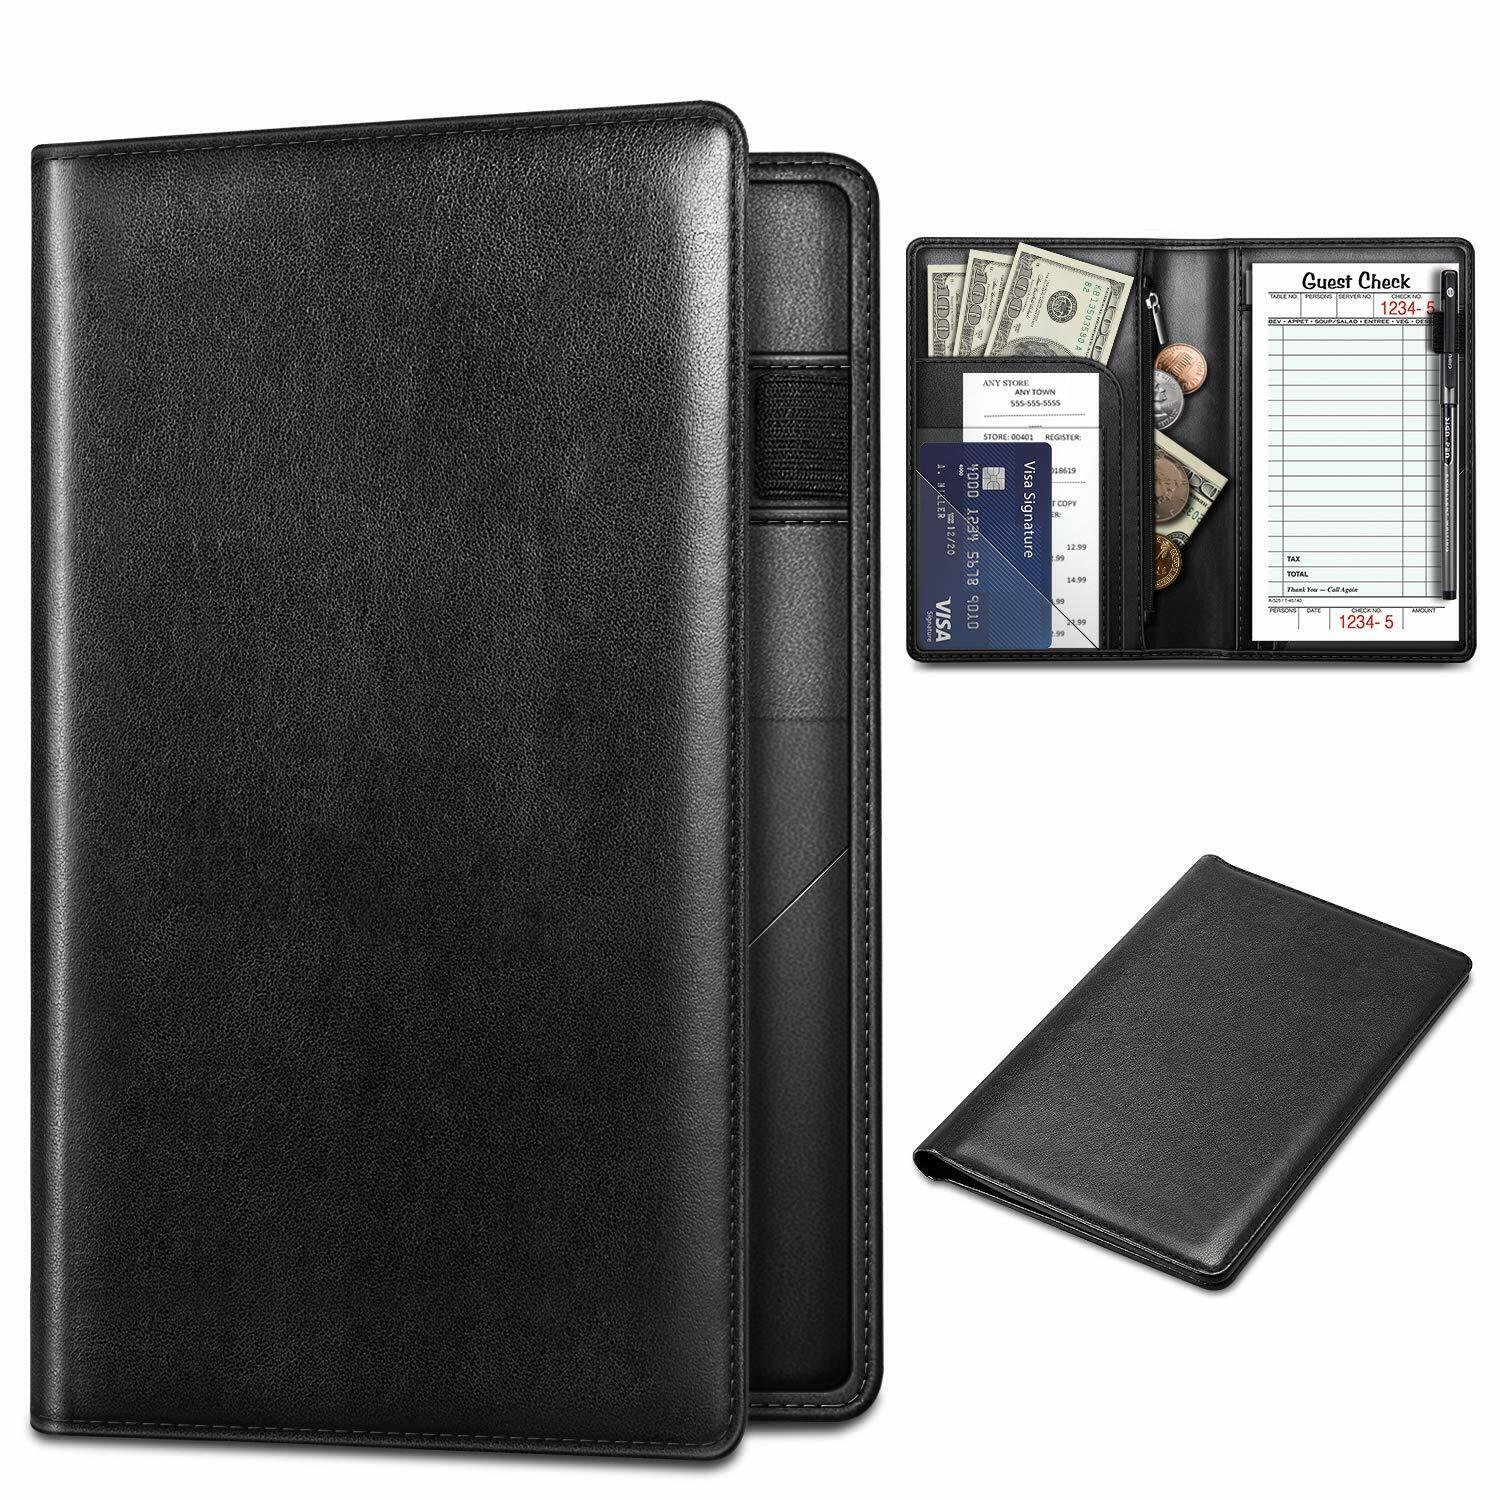 Server Book PU Leather Book Organizer Wallet Zipper Pocket for Waitress Waiters